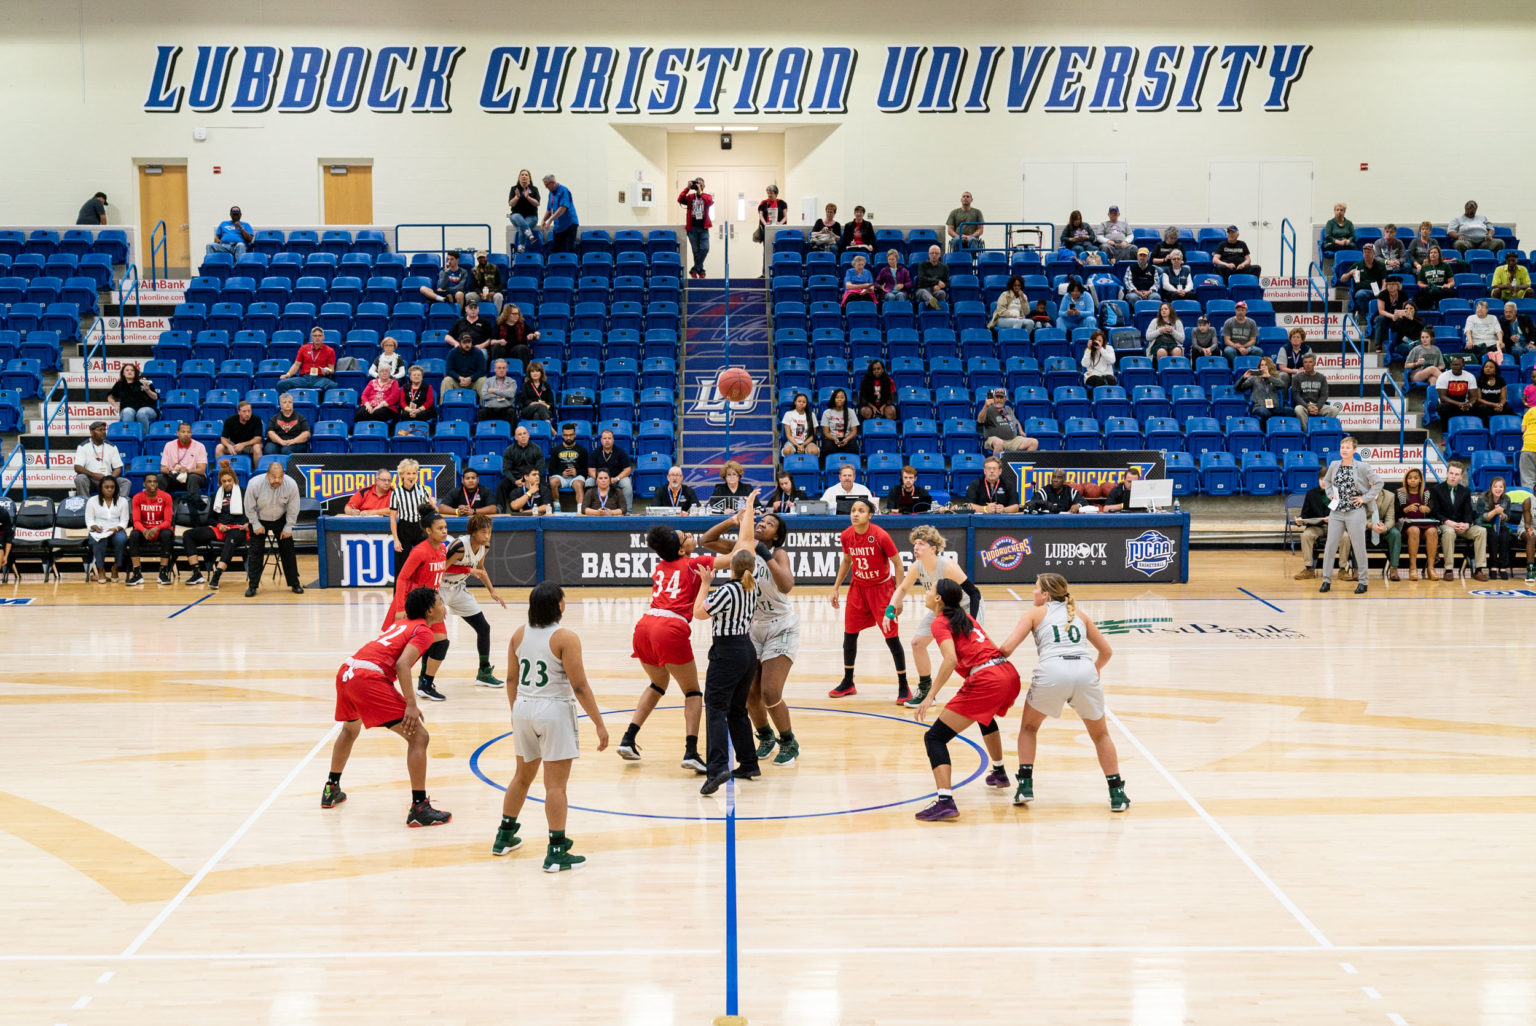 NjcAA Women's Basketball national Championship Sports in Lubbock, TX